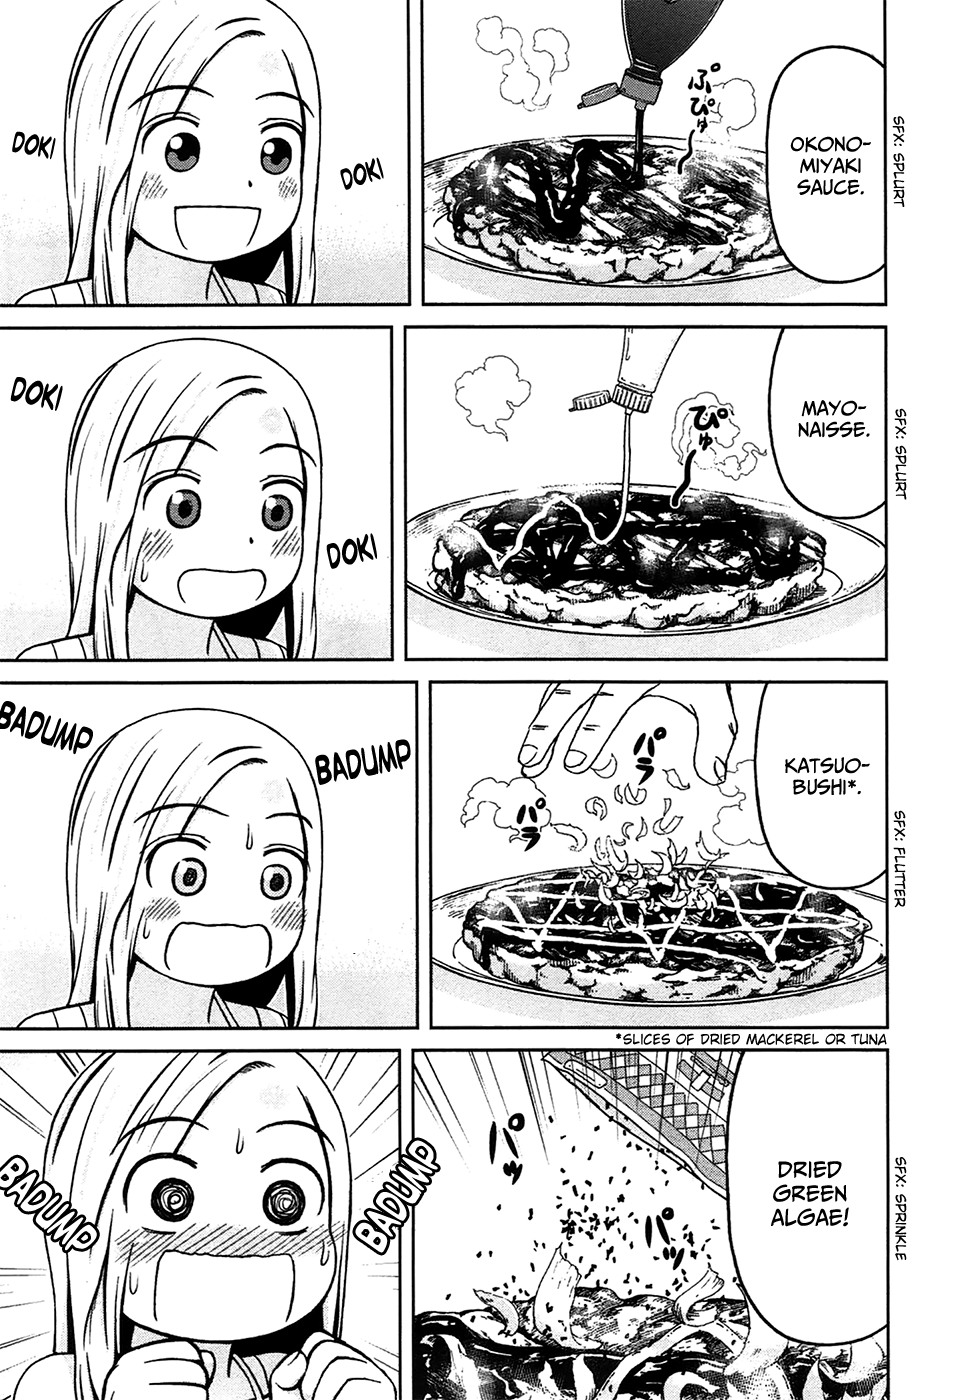 image-7969272-Okonomiyaki_Manga.w640.png